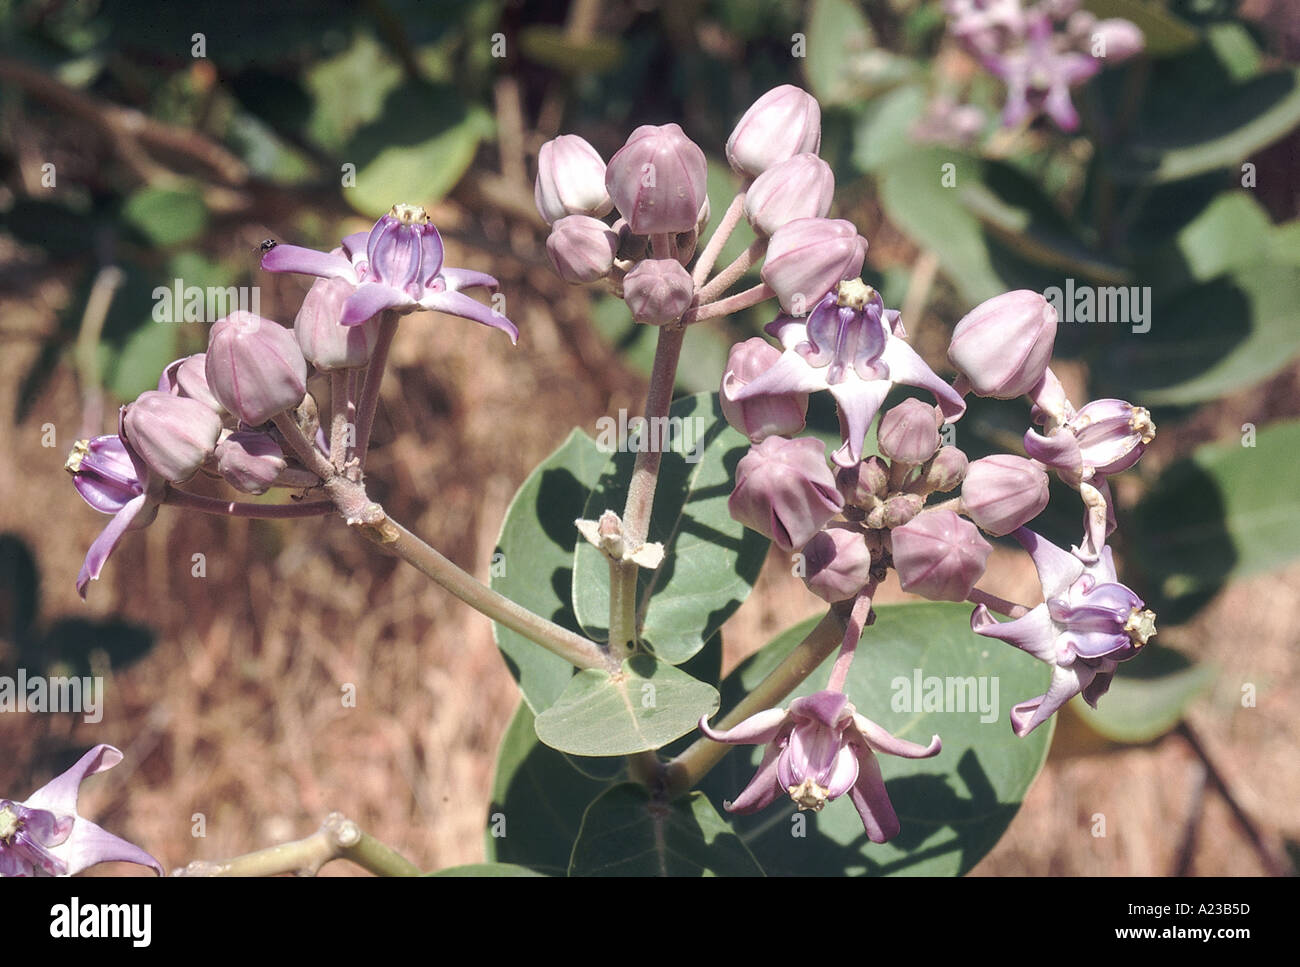 Crown Flower, Akund. Calotropis gigantea Family: Asclepiadaceae Milkweed family. Waxy flowers lavender.  Nasrapur, Pune, Maharashtra, India Stock Photo